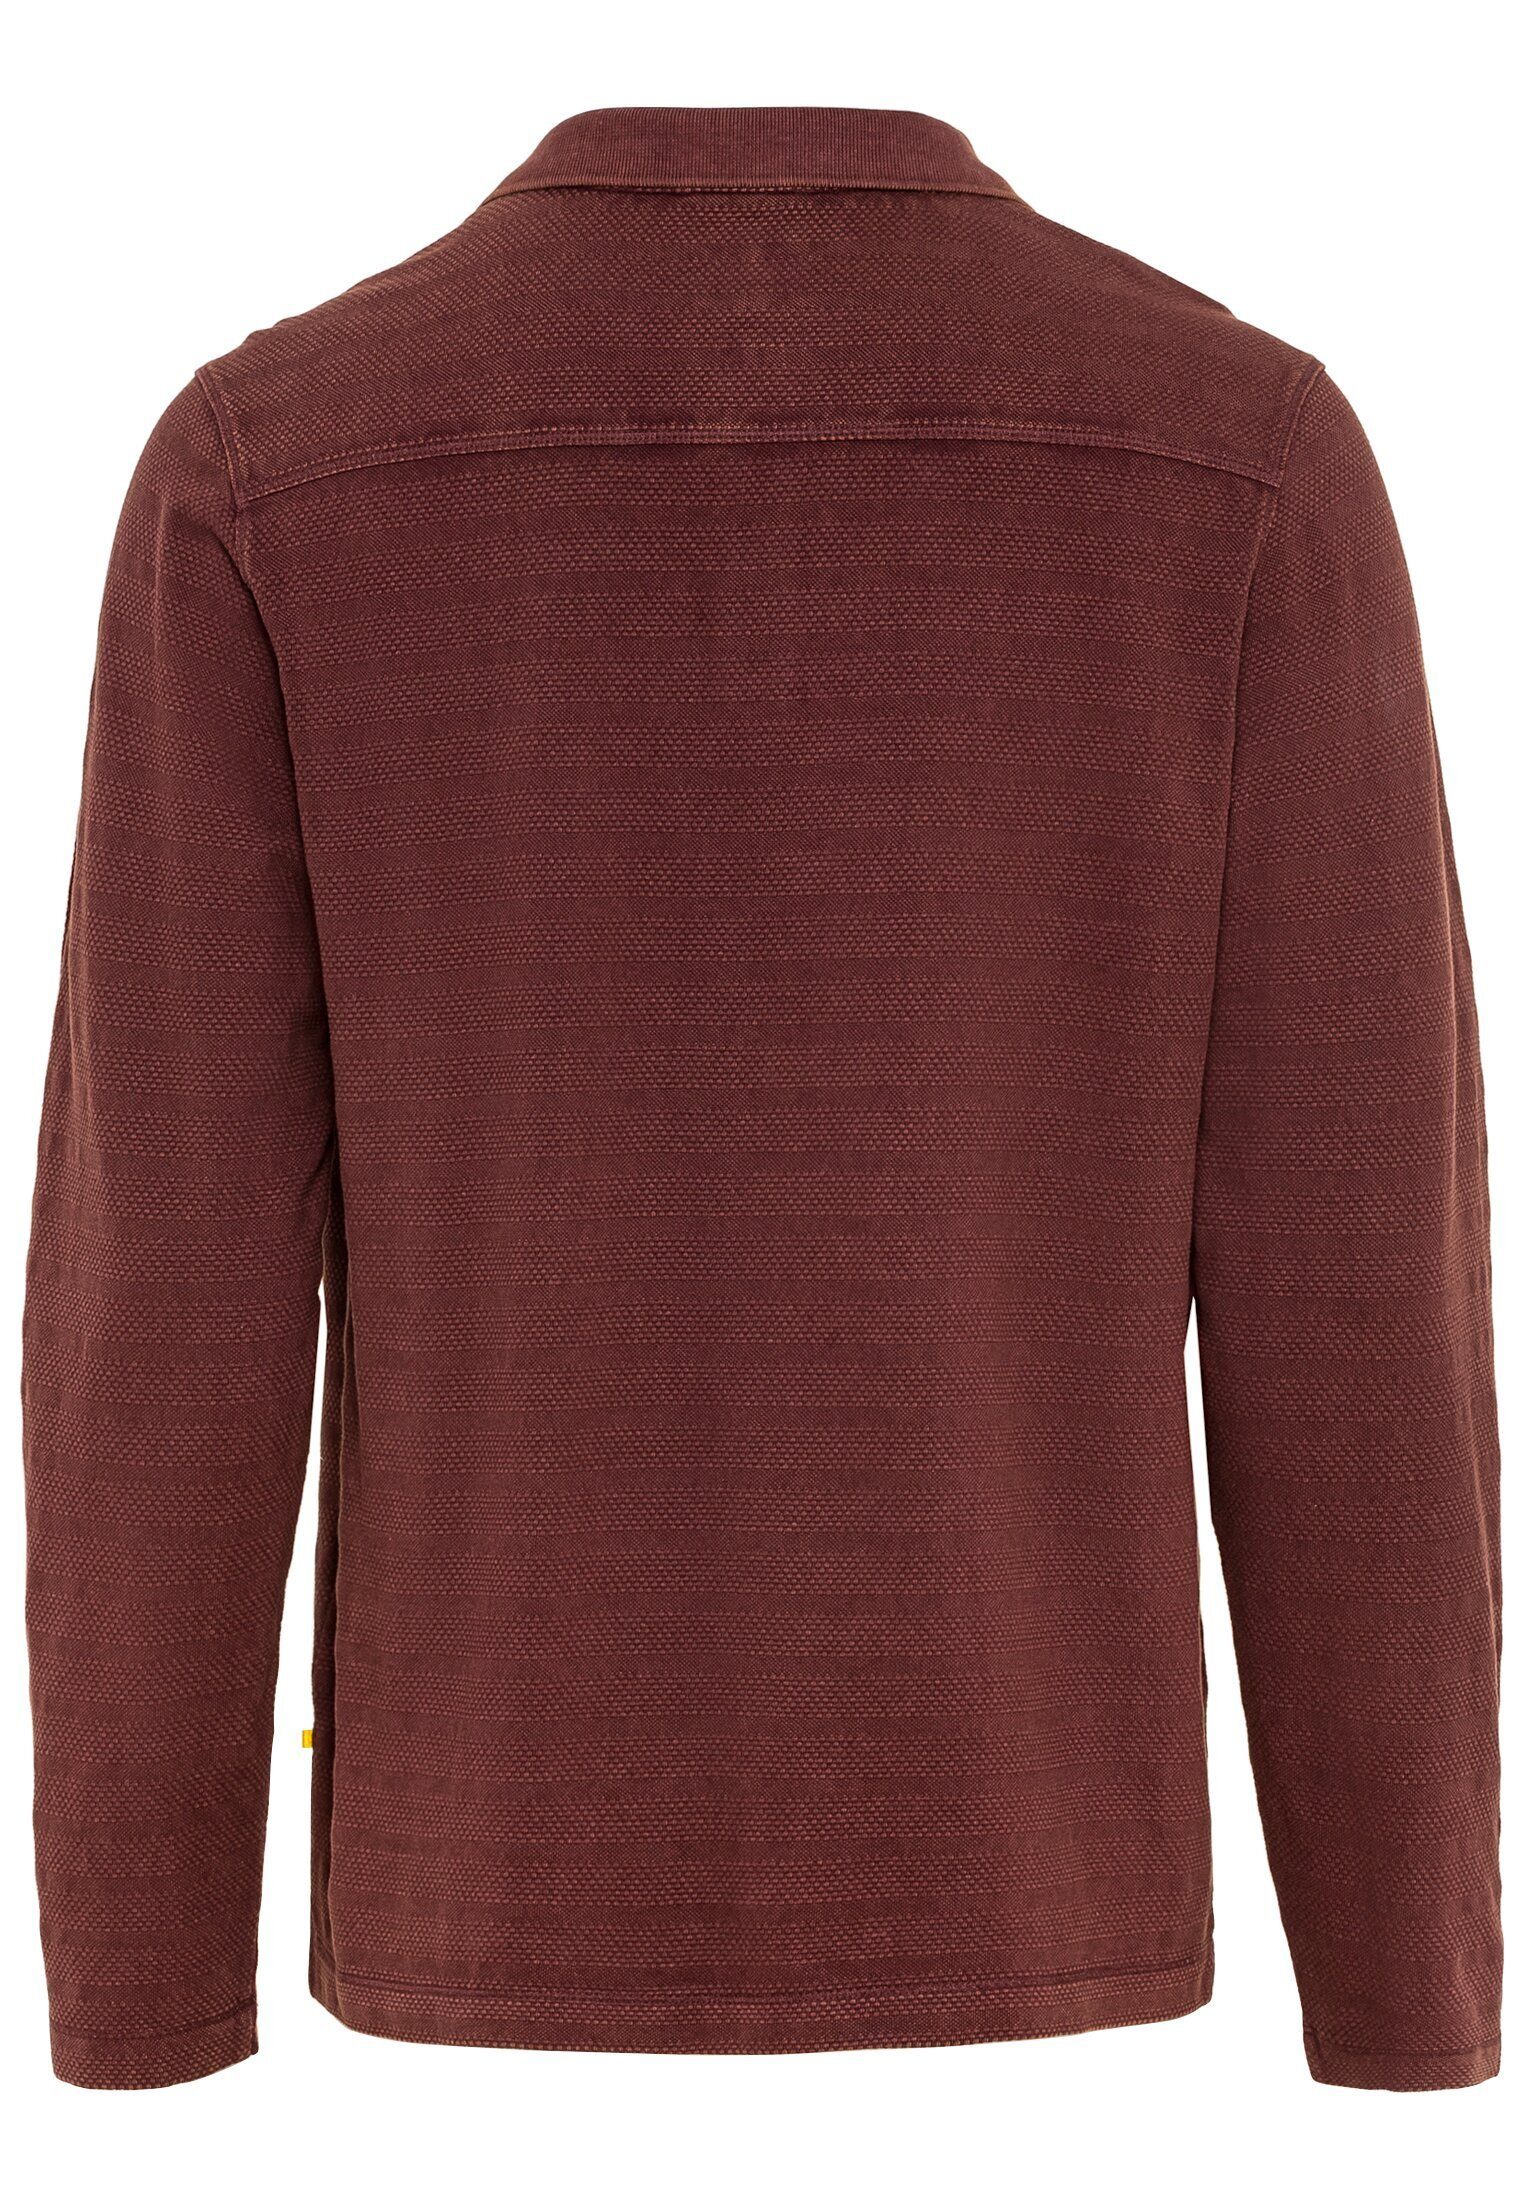 Poloshirt aus Baumwolle active reiner Rot Shirts_Langarm-Poloshirt camel